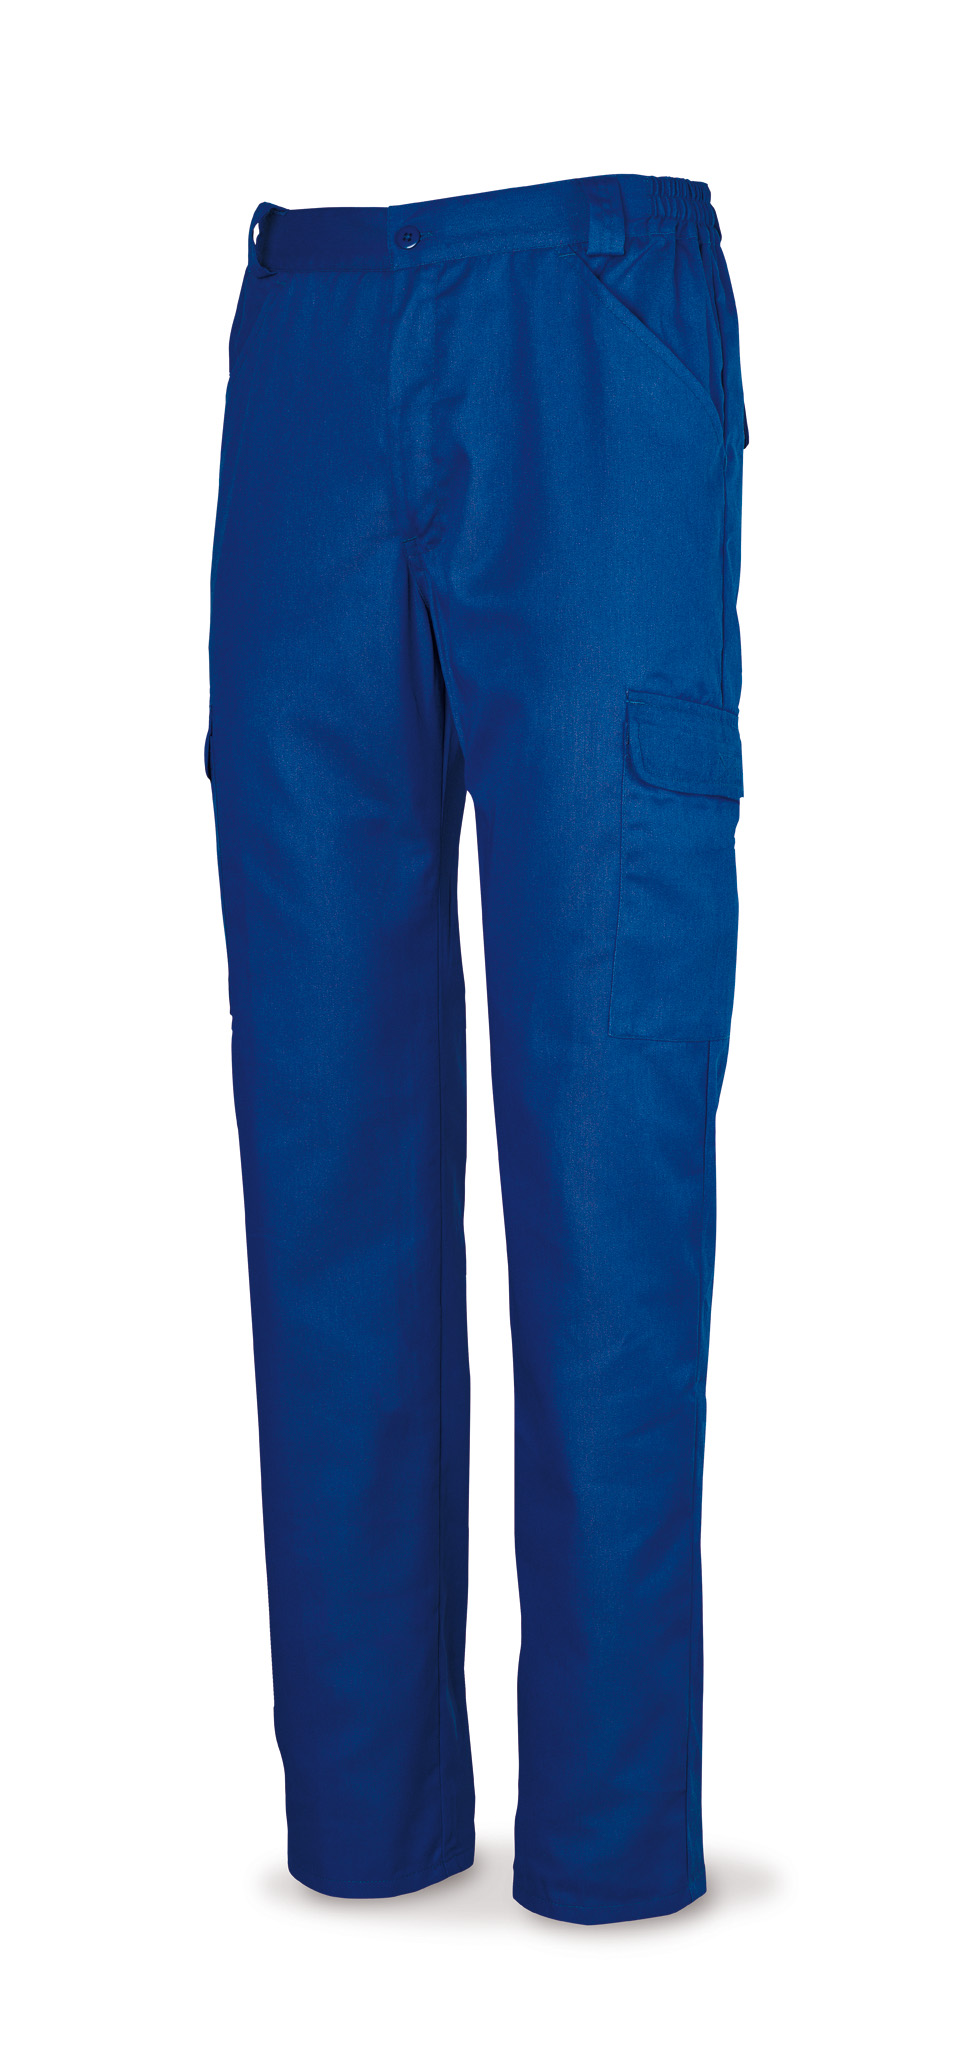 388-PE Vestuario Laboral Serie Básica Pantalón azulina algodón 200 g. Multibolsillos.